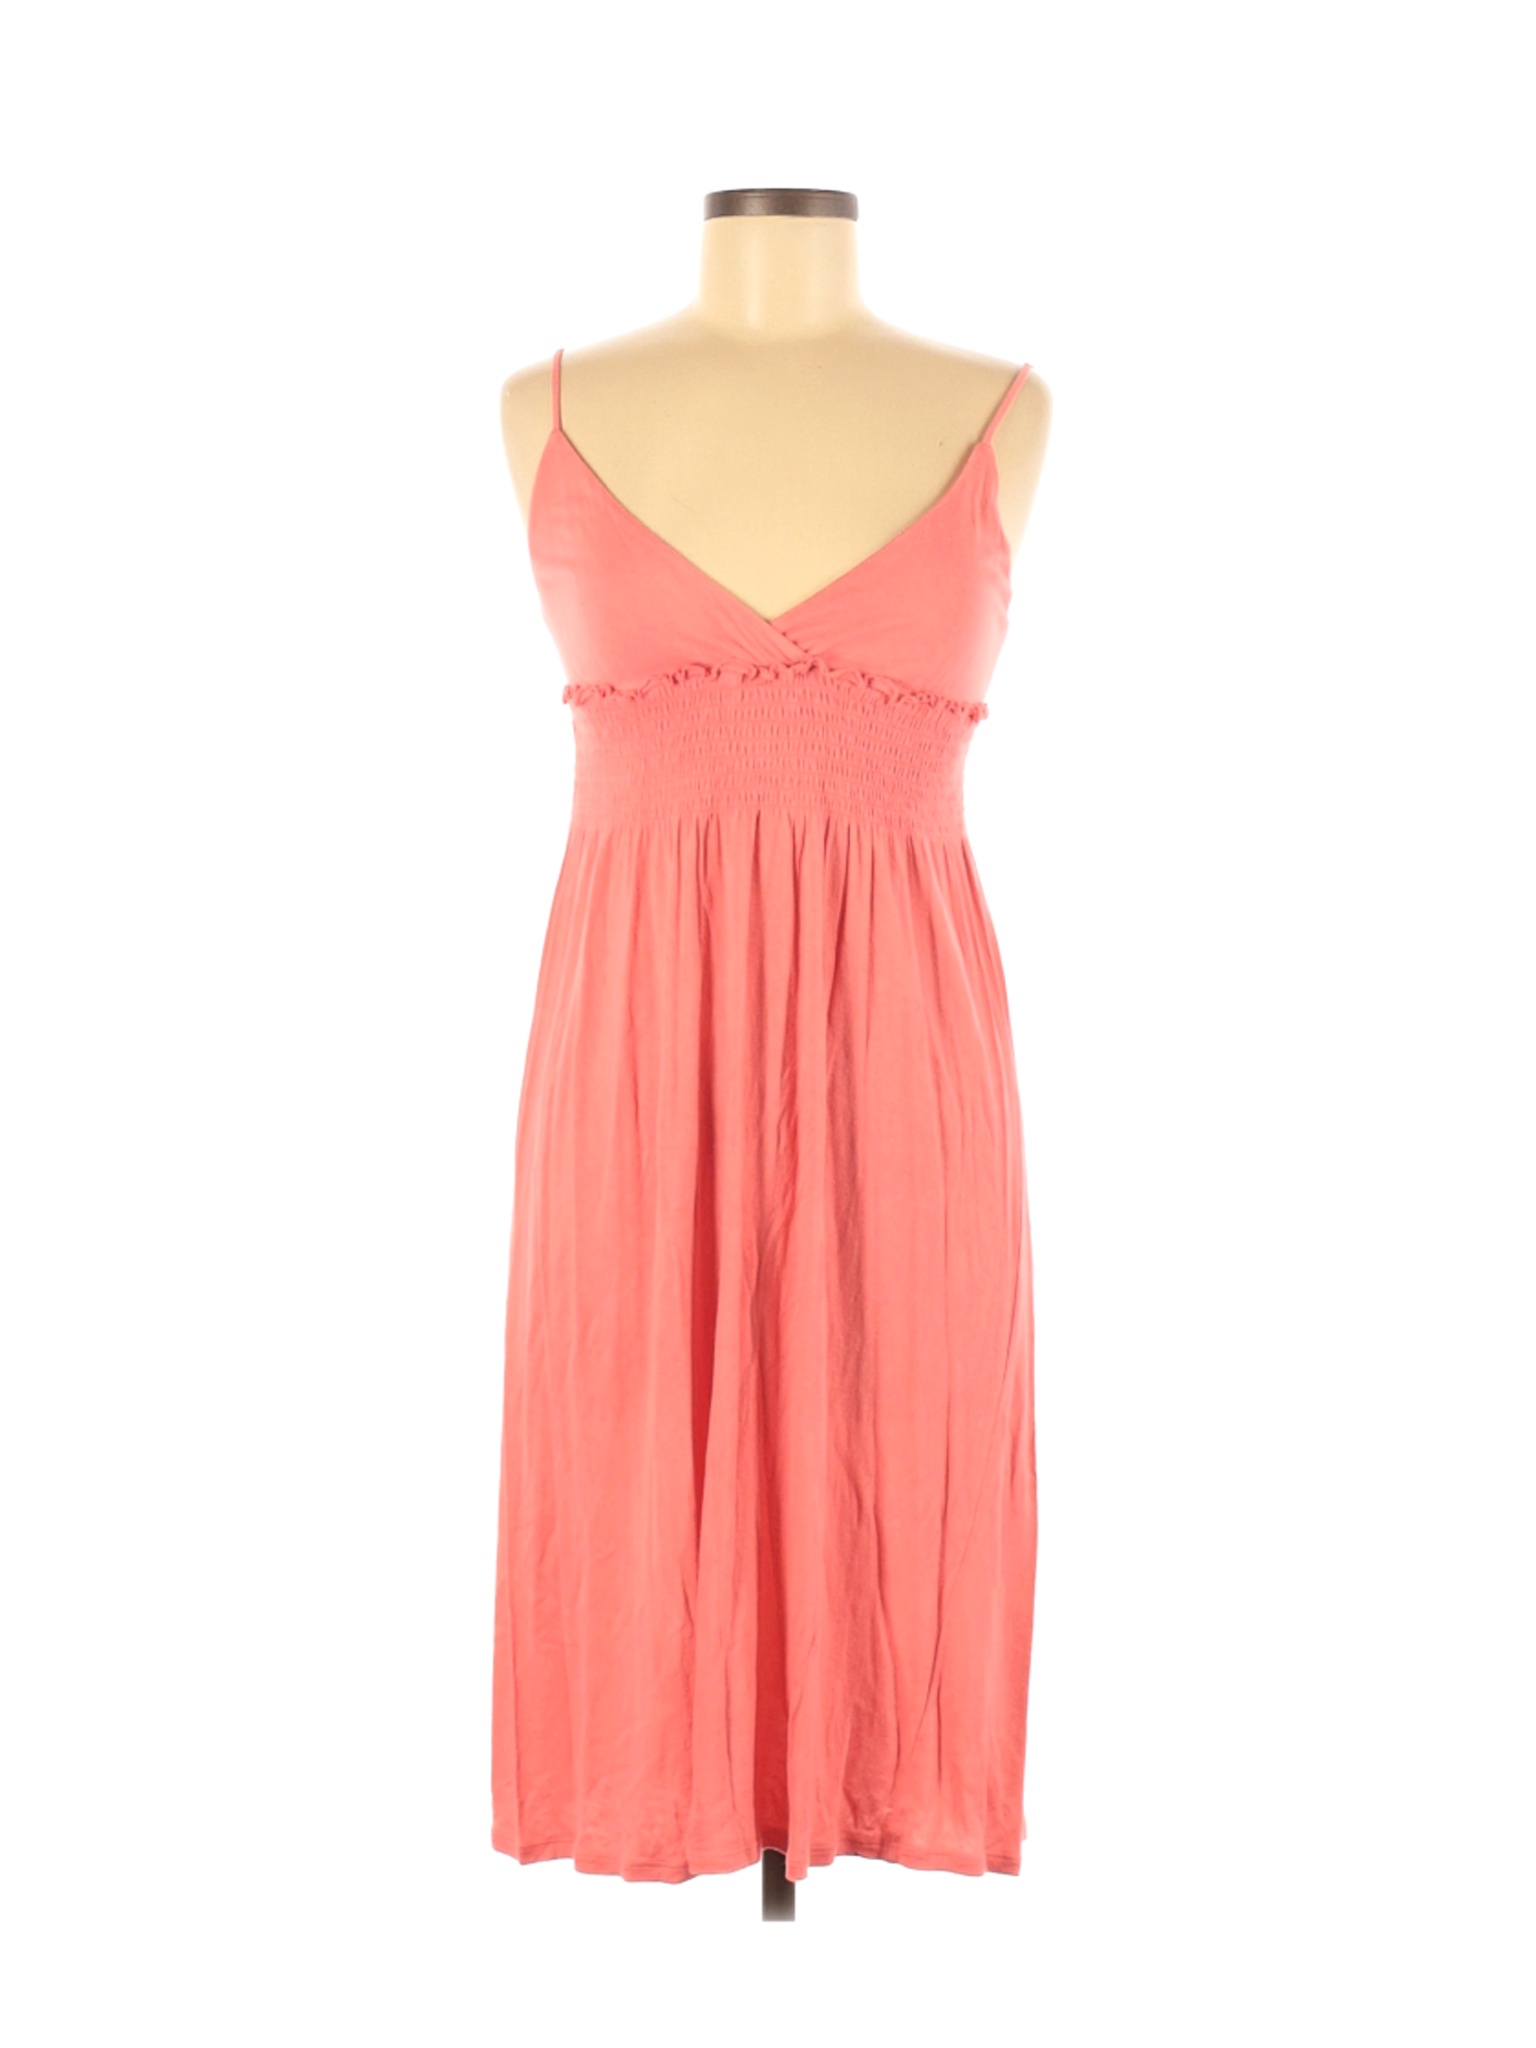 Gap Women Pink Casual Dress M | eBay